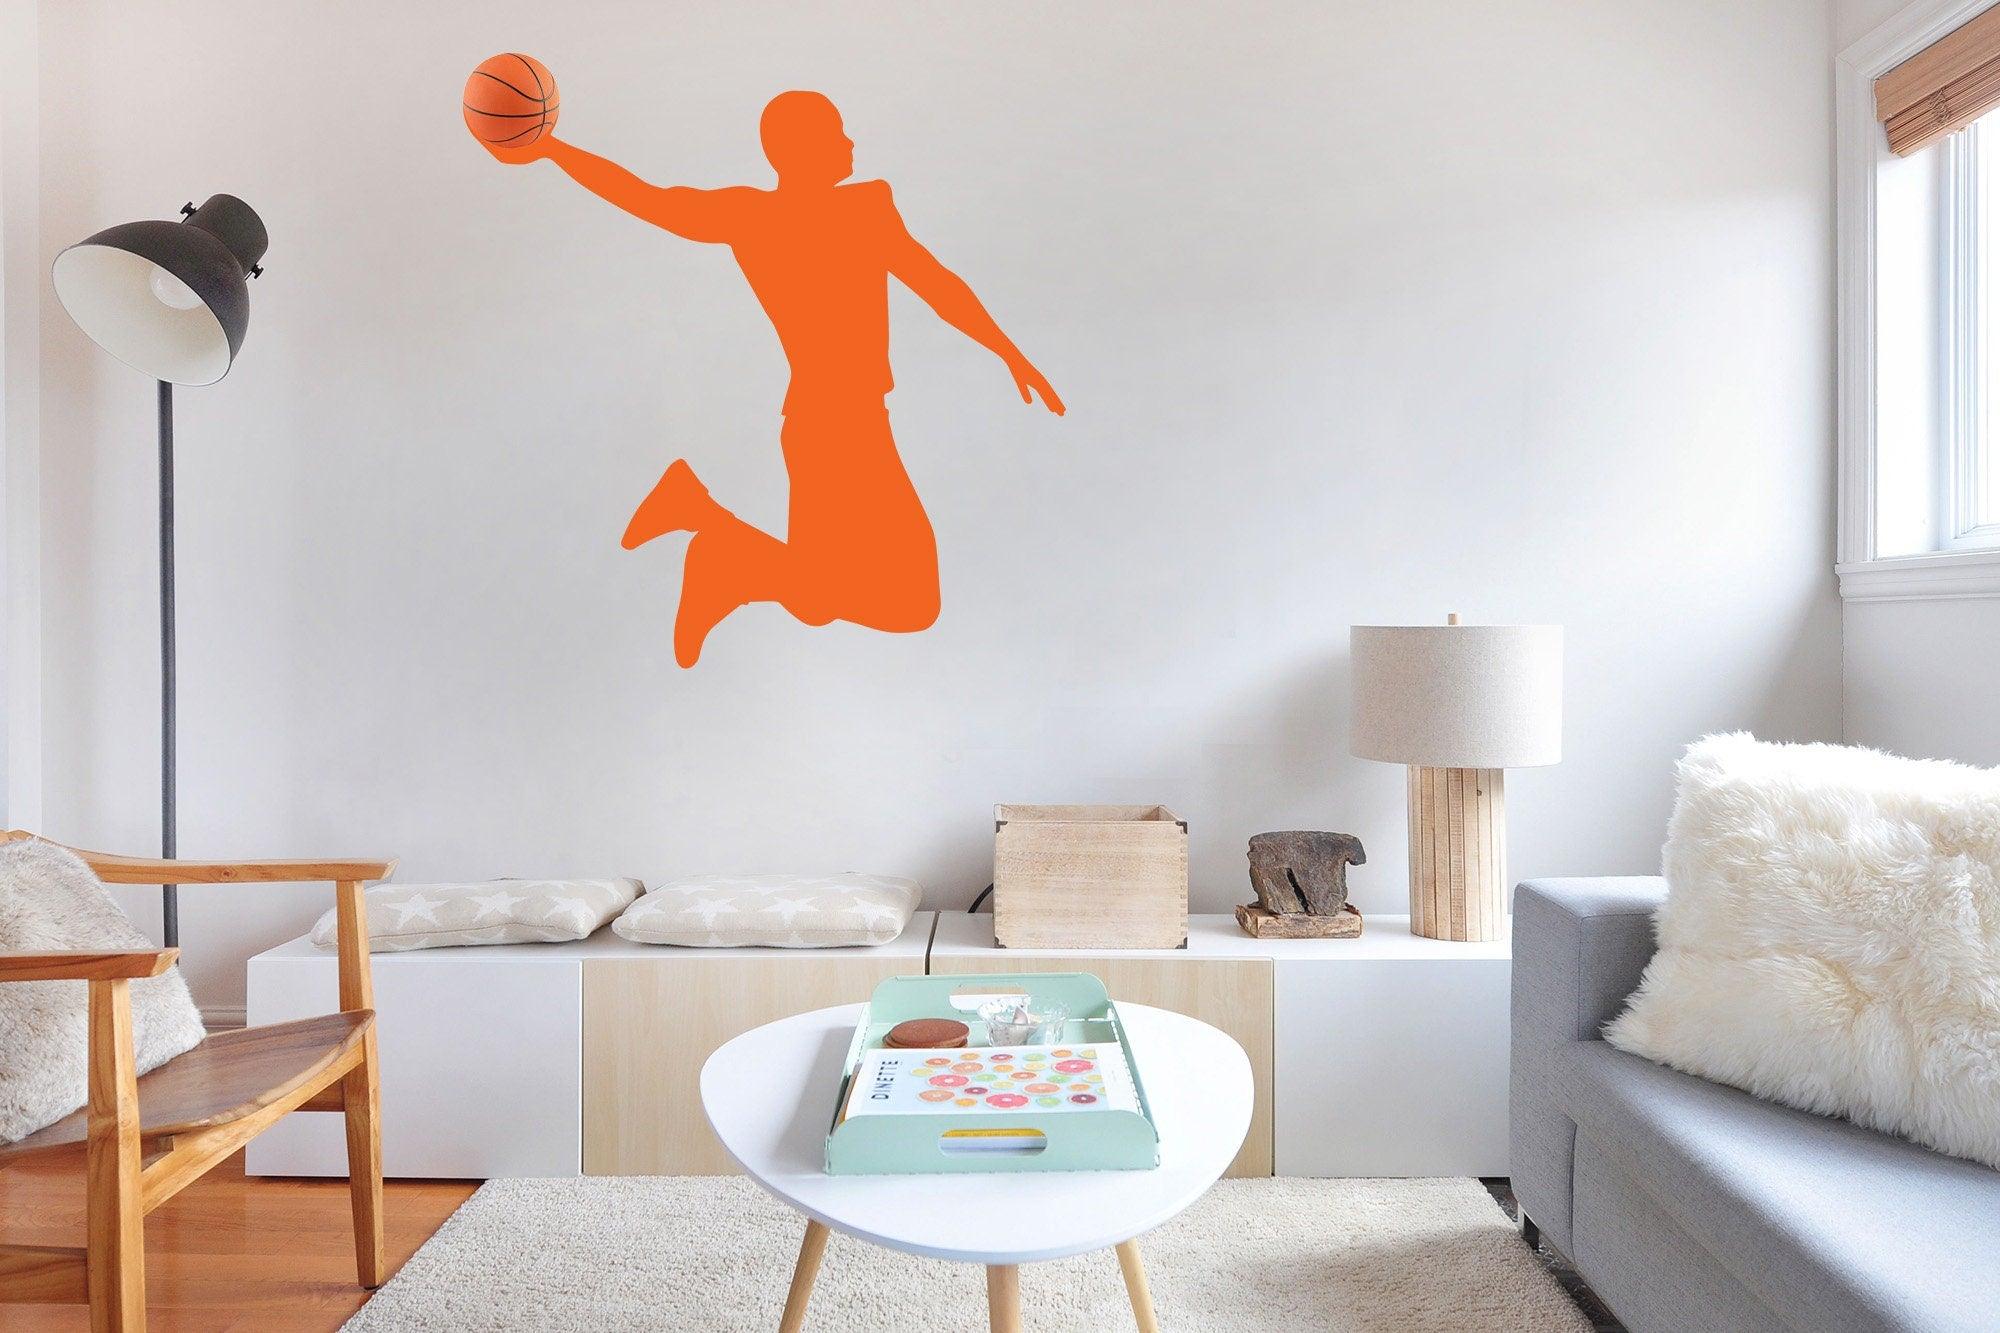 Michael Jordan Jump Shot with Ball Decal | Kids Gift | Kids Room | Basketball | No Wall Damage | Removable